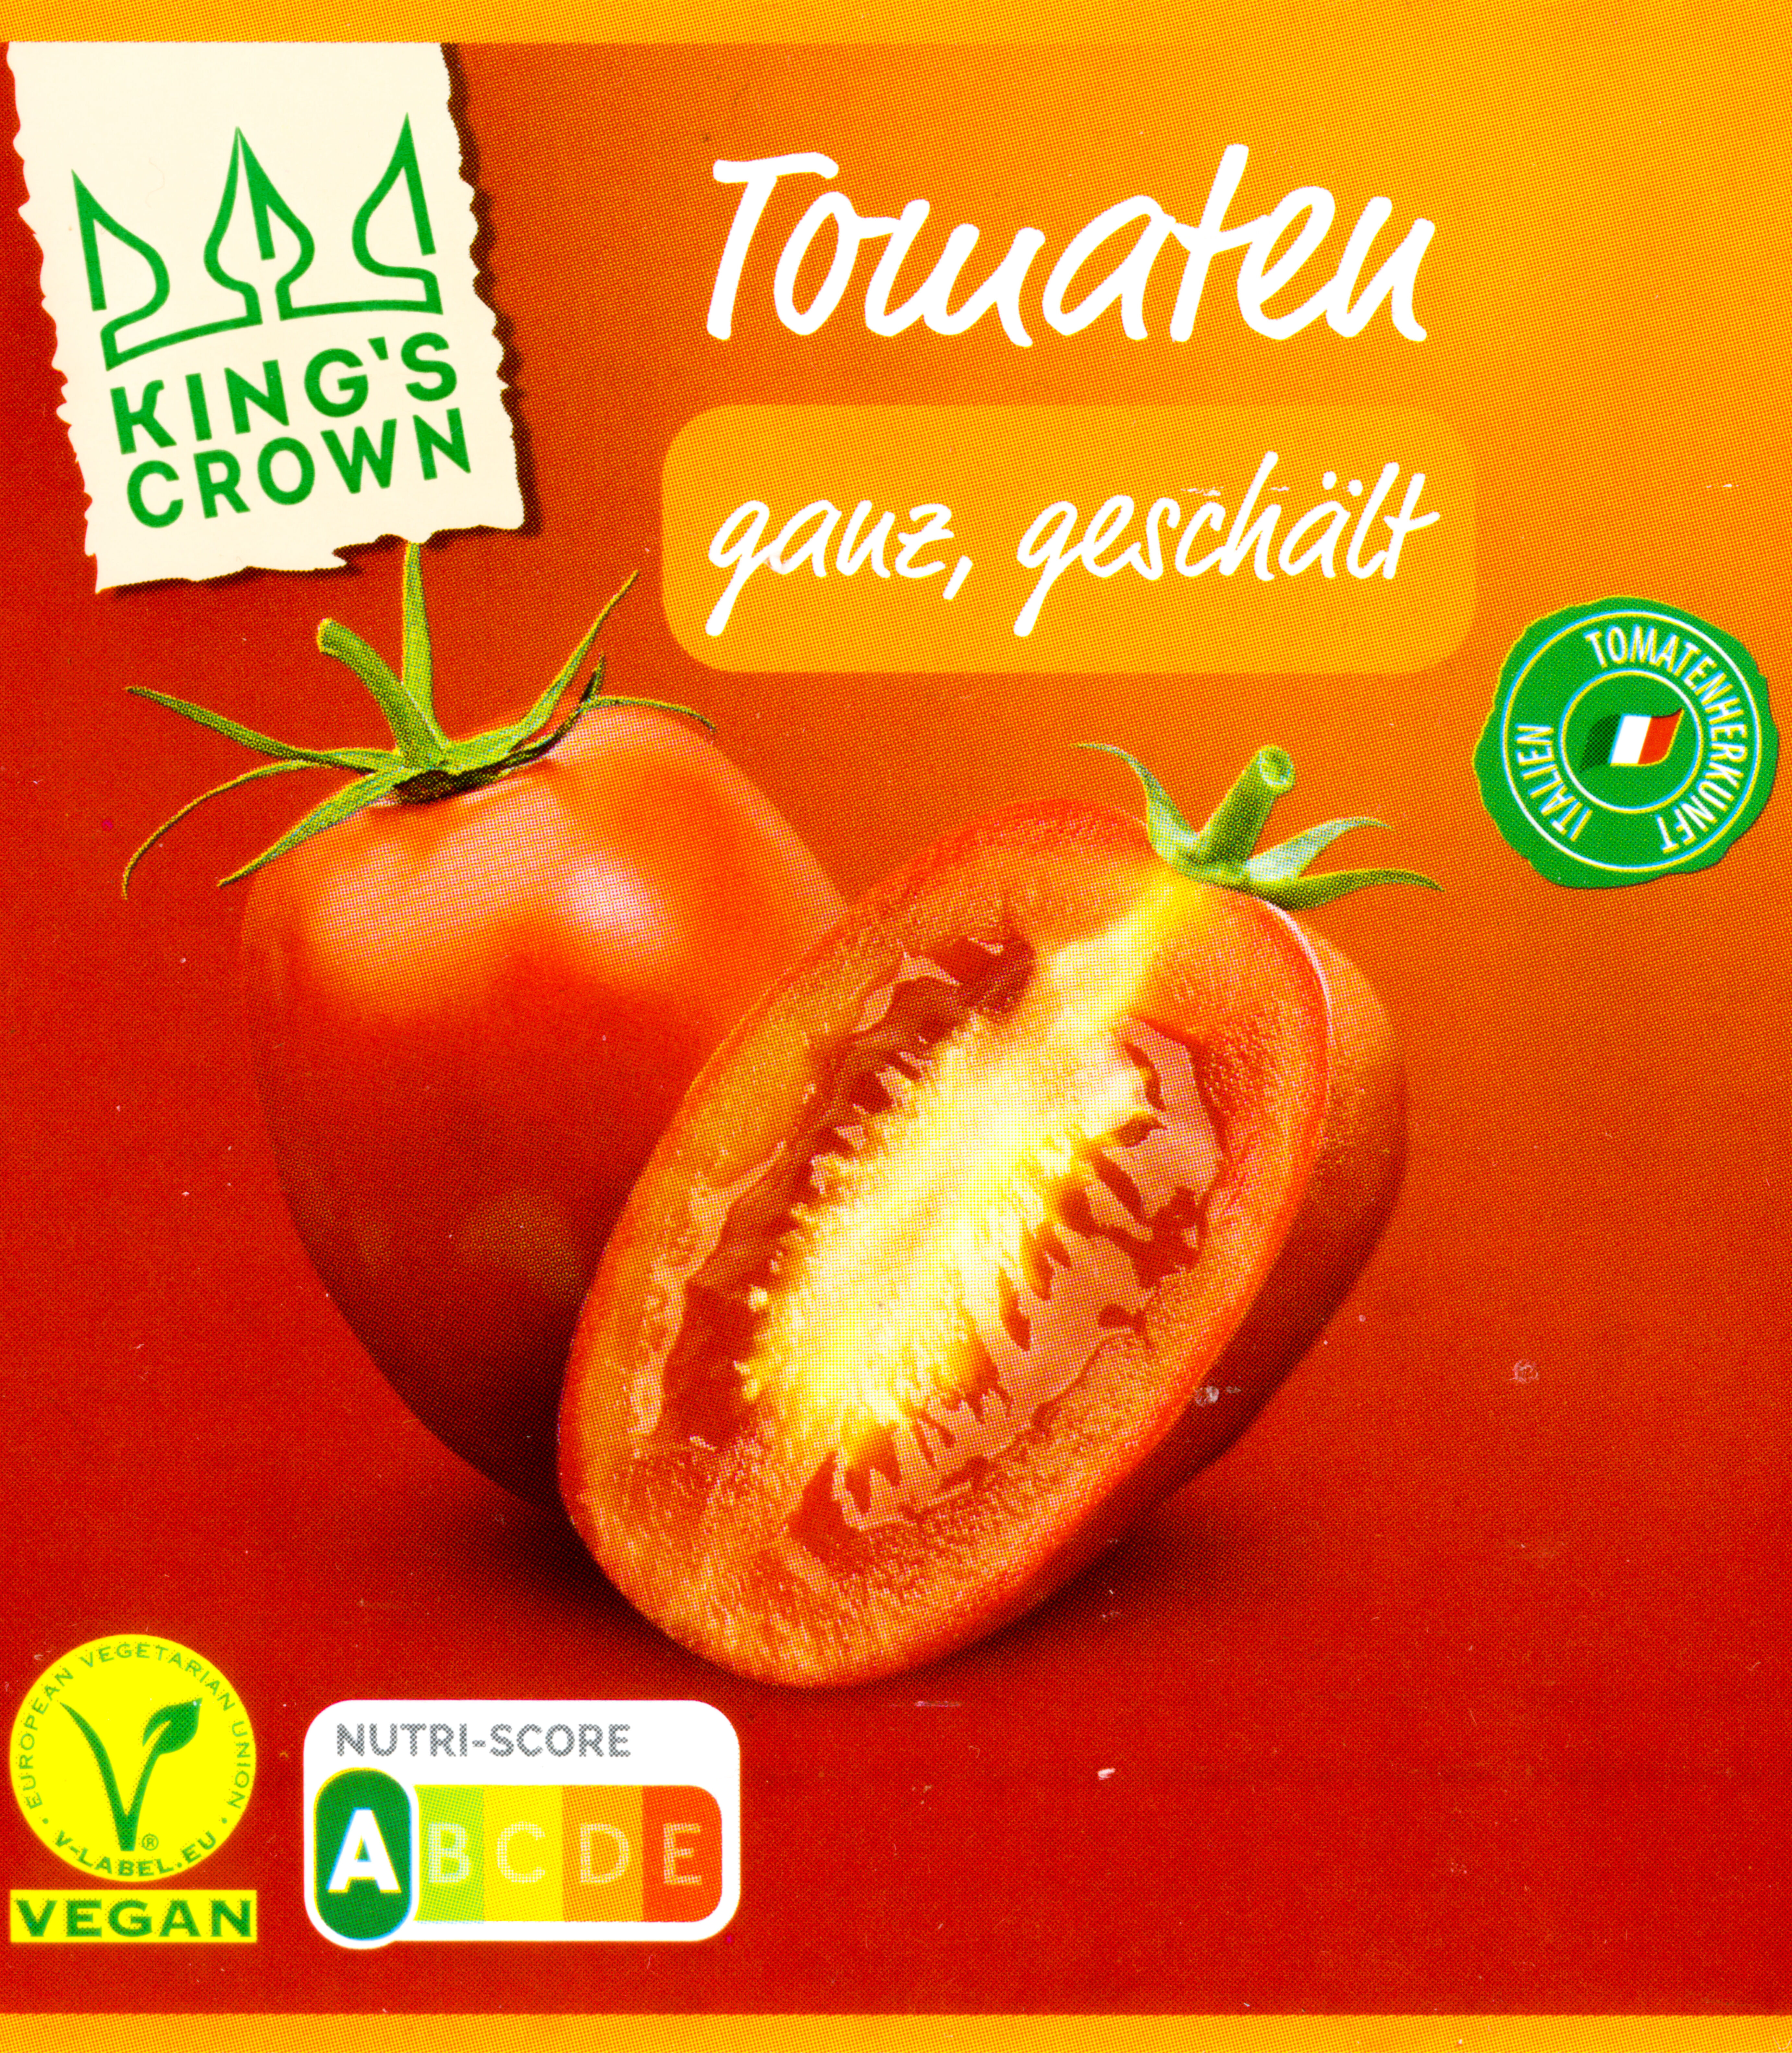 Aldi King's Crown Tomaten ganz geschält - نتاج - de